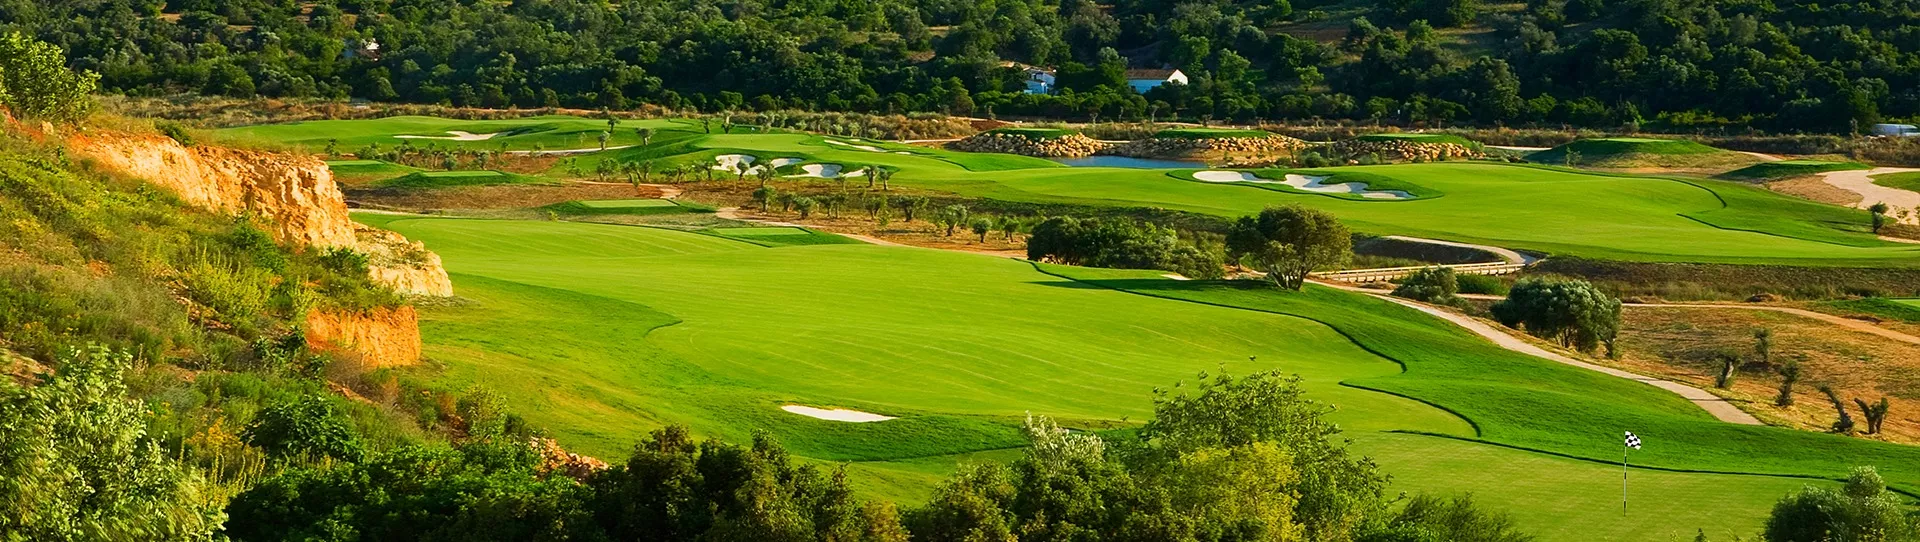 Portugal golf holidays - Amendoeira Twix Experience - Photo 1